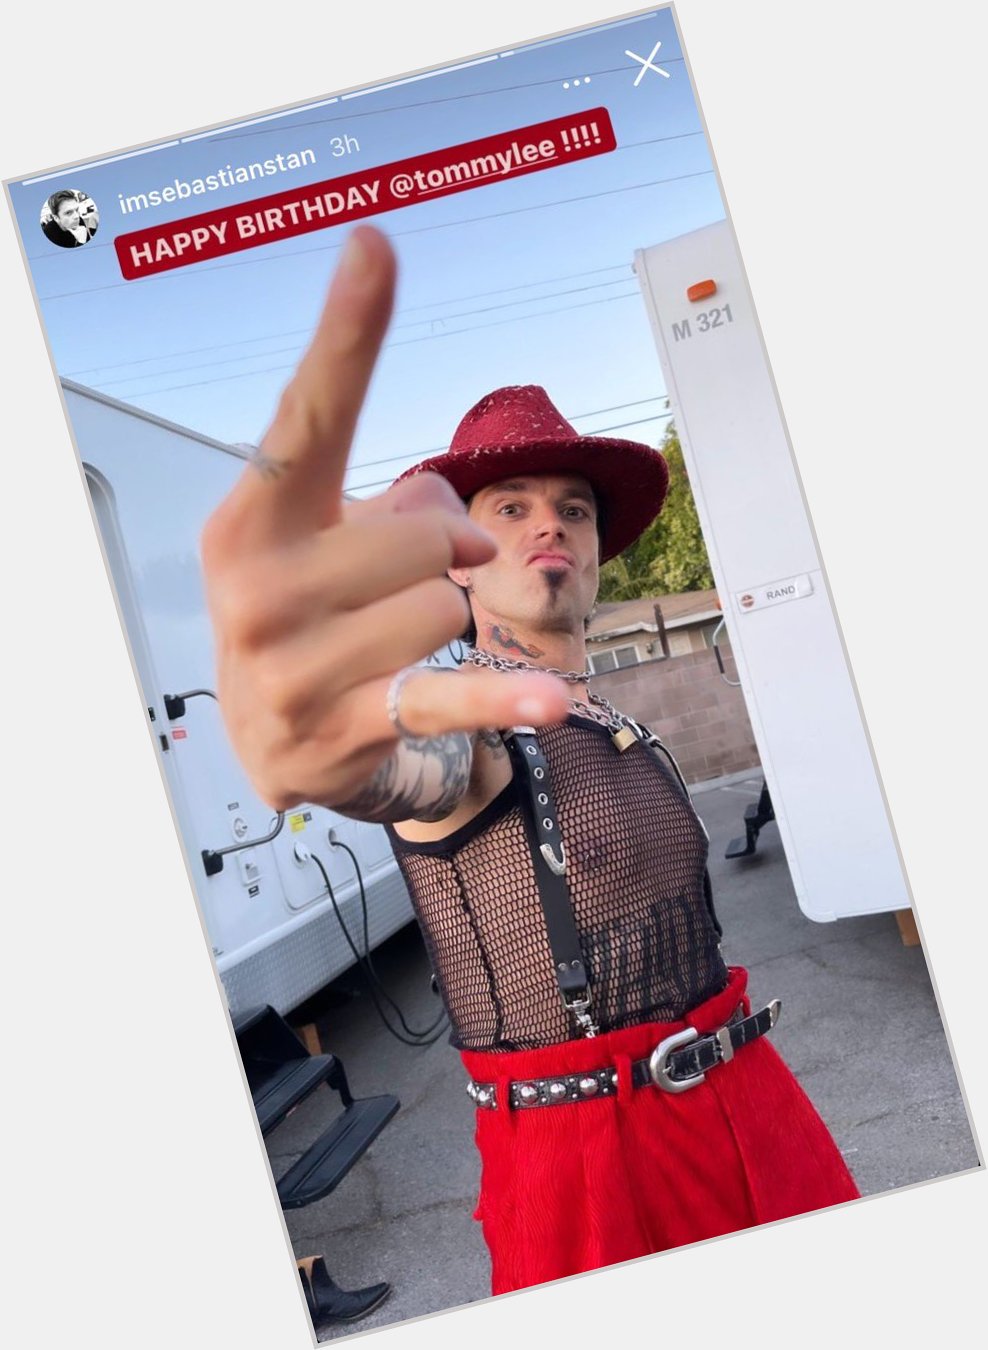 Sebastian s IG post wishing Tommy Lee a Happy Birthday. 